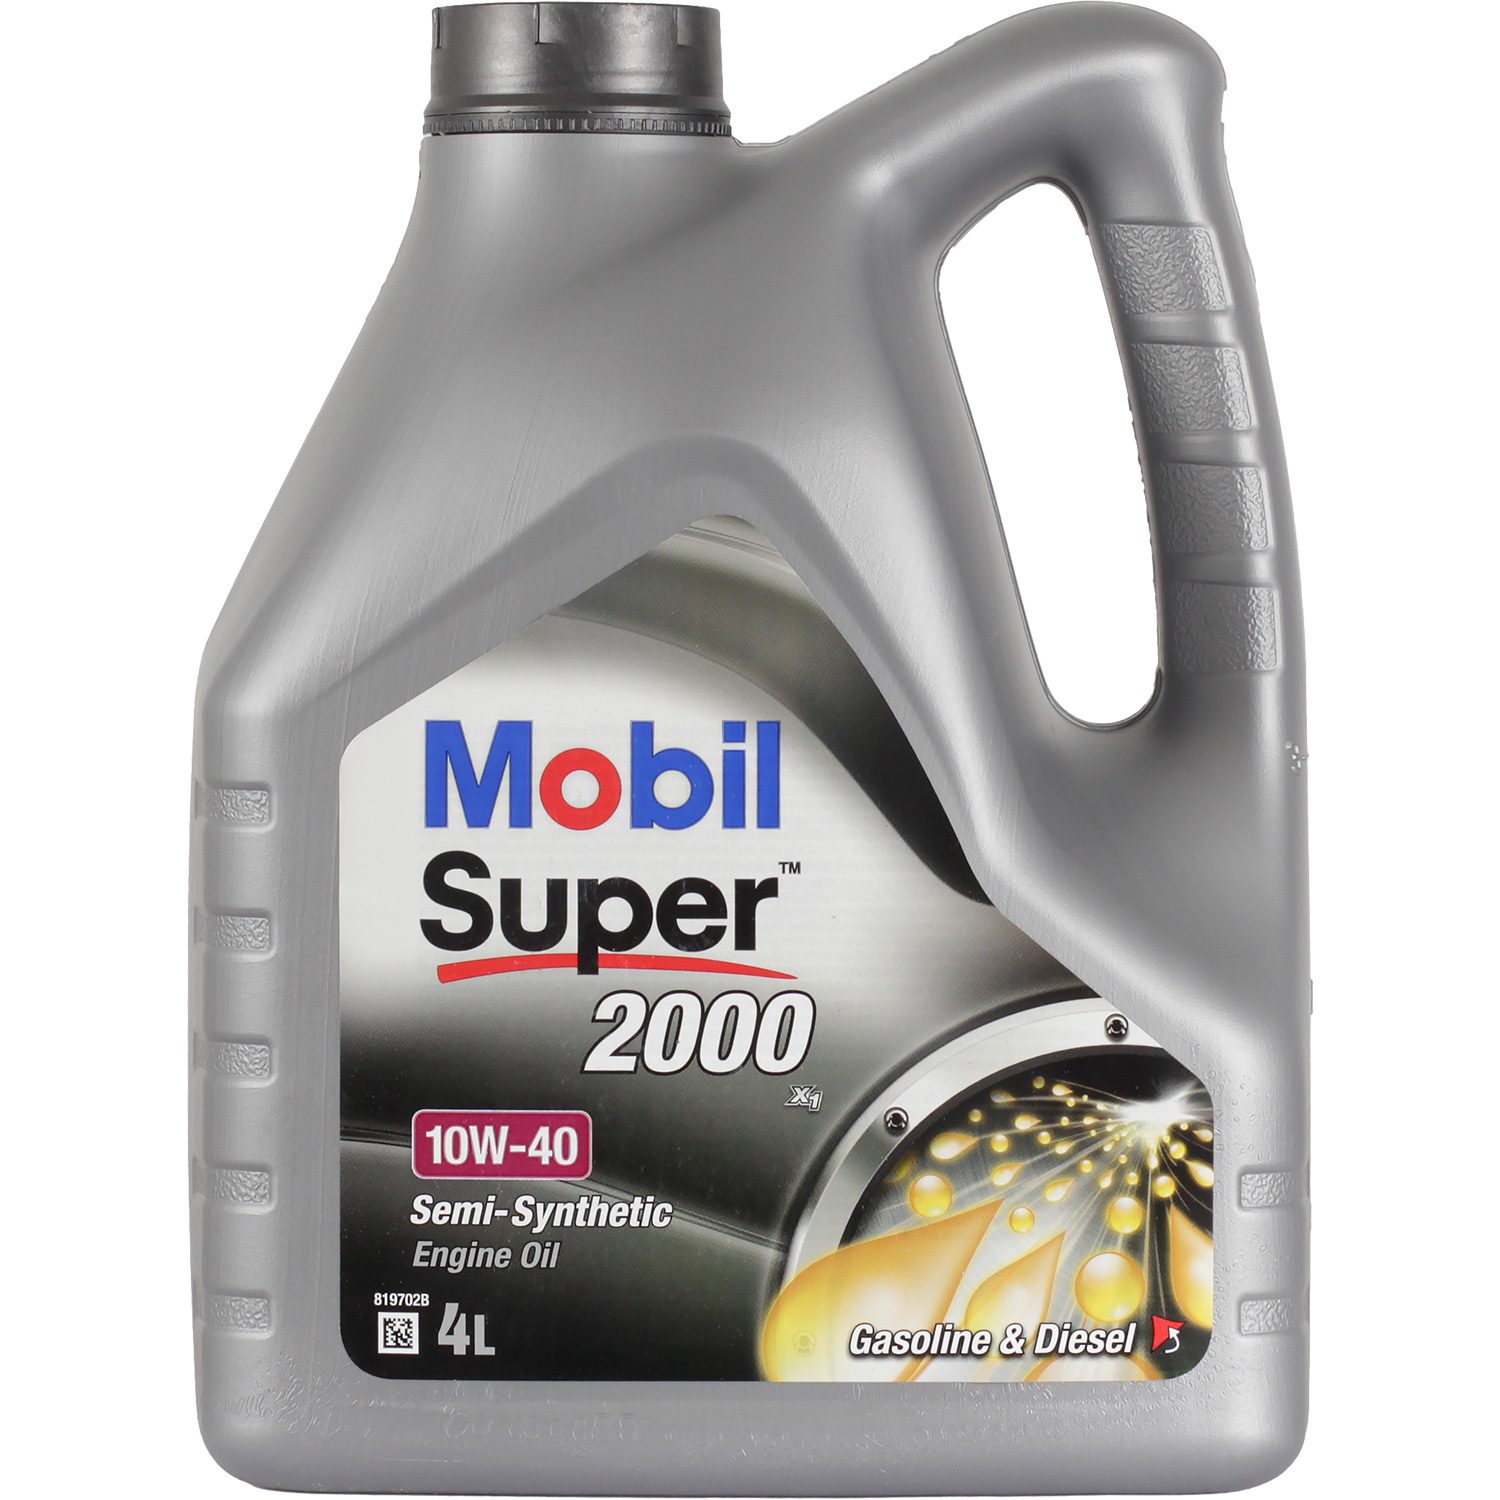 Mobil Моторное масло Mobil Super 2000 X1 10W-40, 4 л mobil моторное масло mobil super 3000 x1 5w 40 4 л